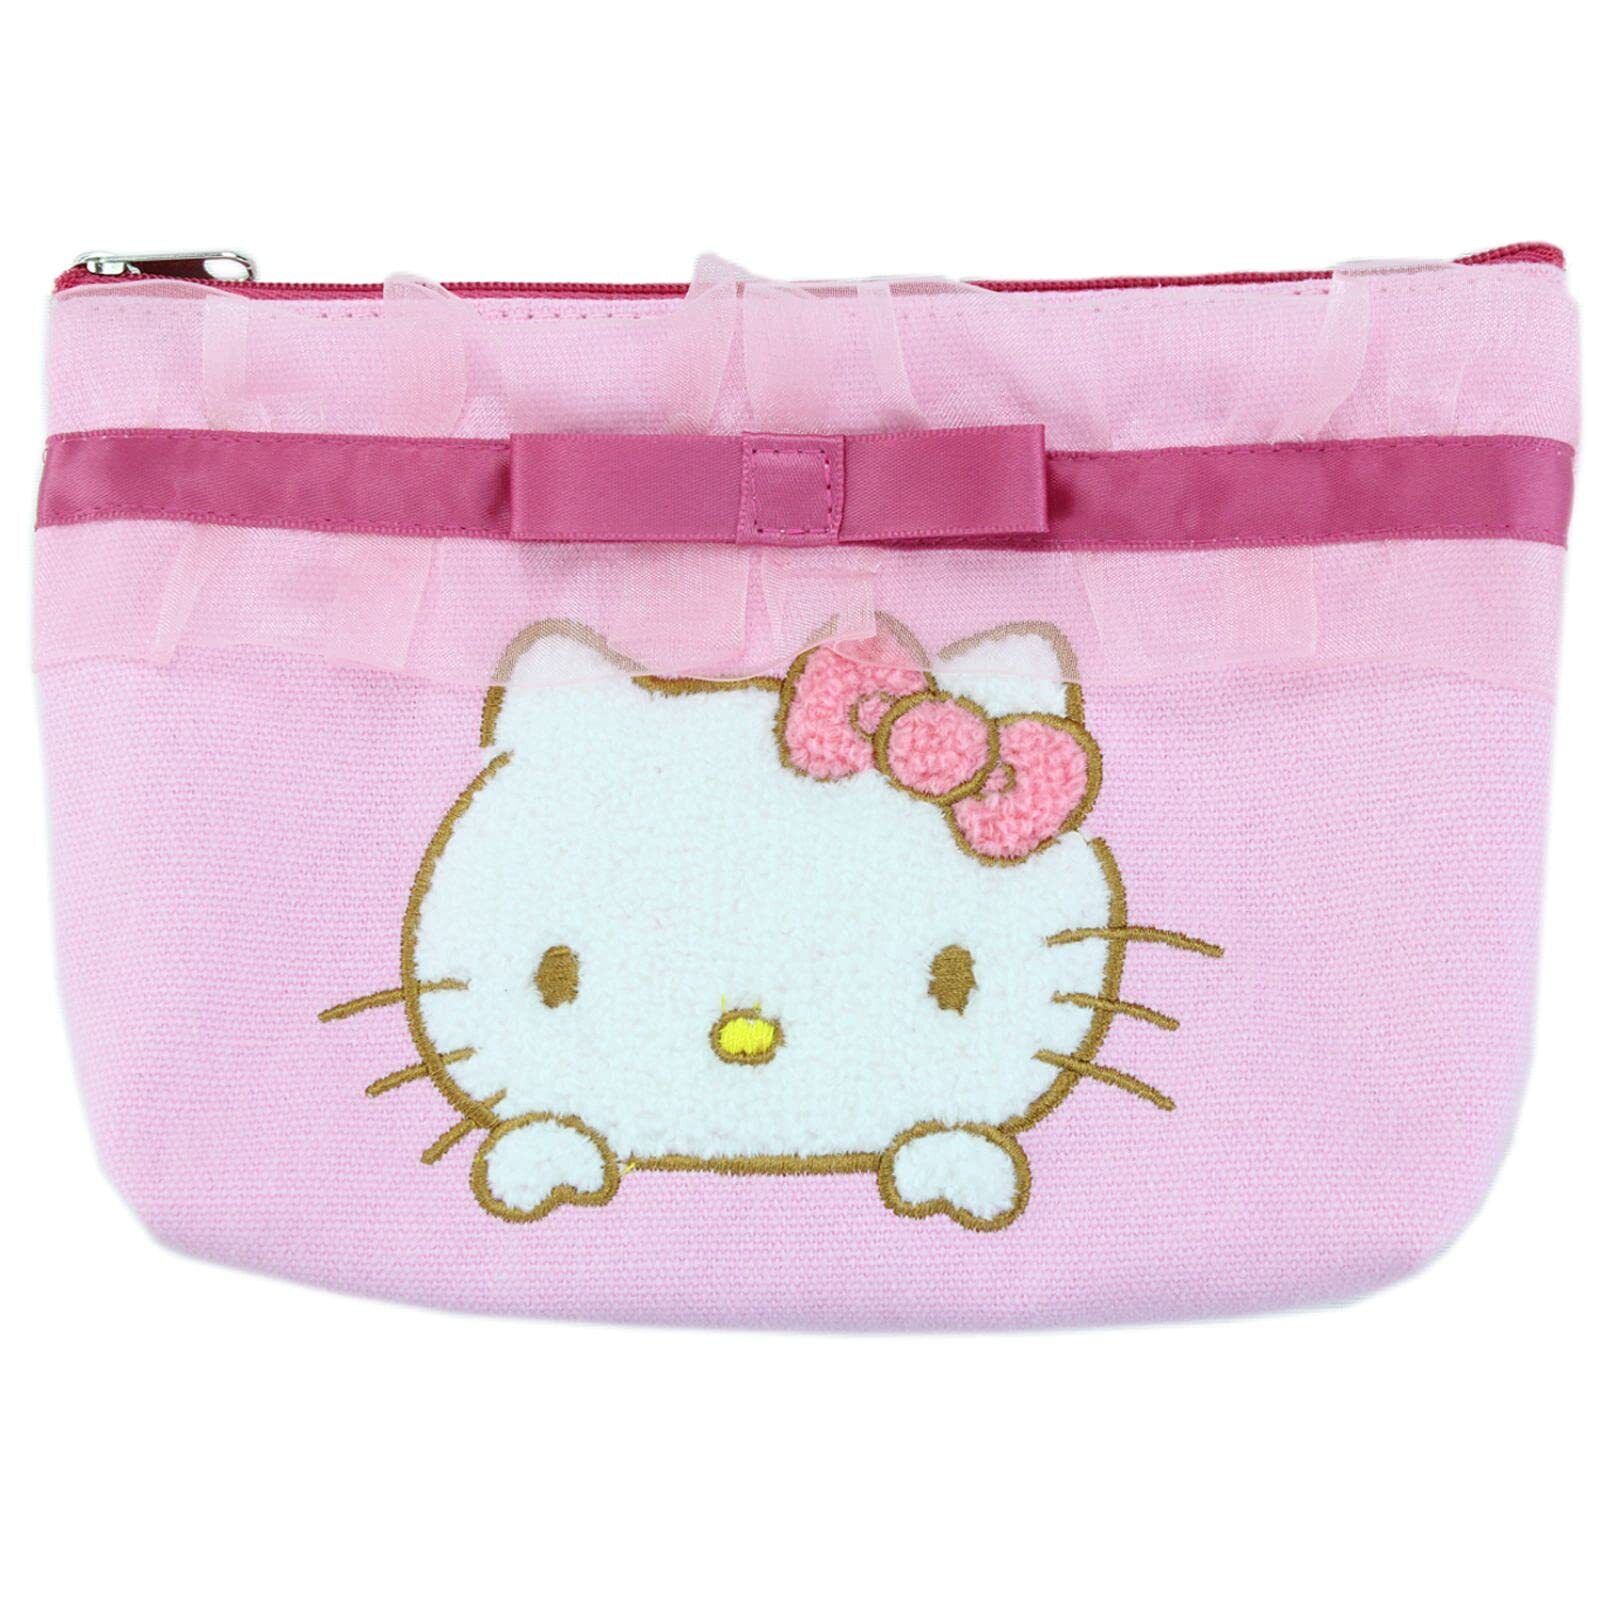 Yasuda Trading Hello Kitty Sagara Embroidery Frill Pouch KTpouch 5001